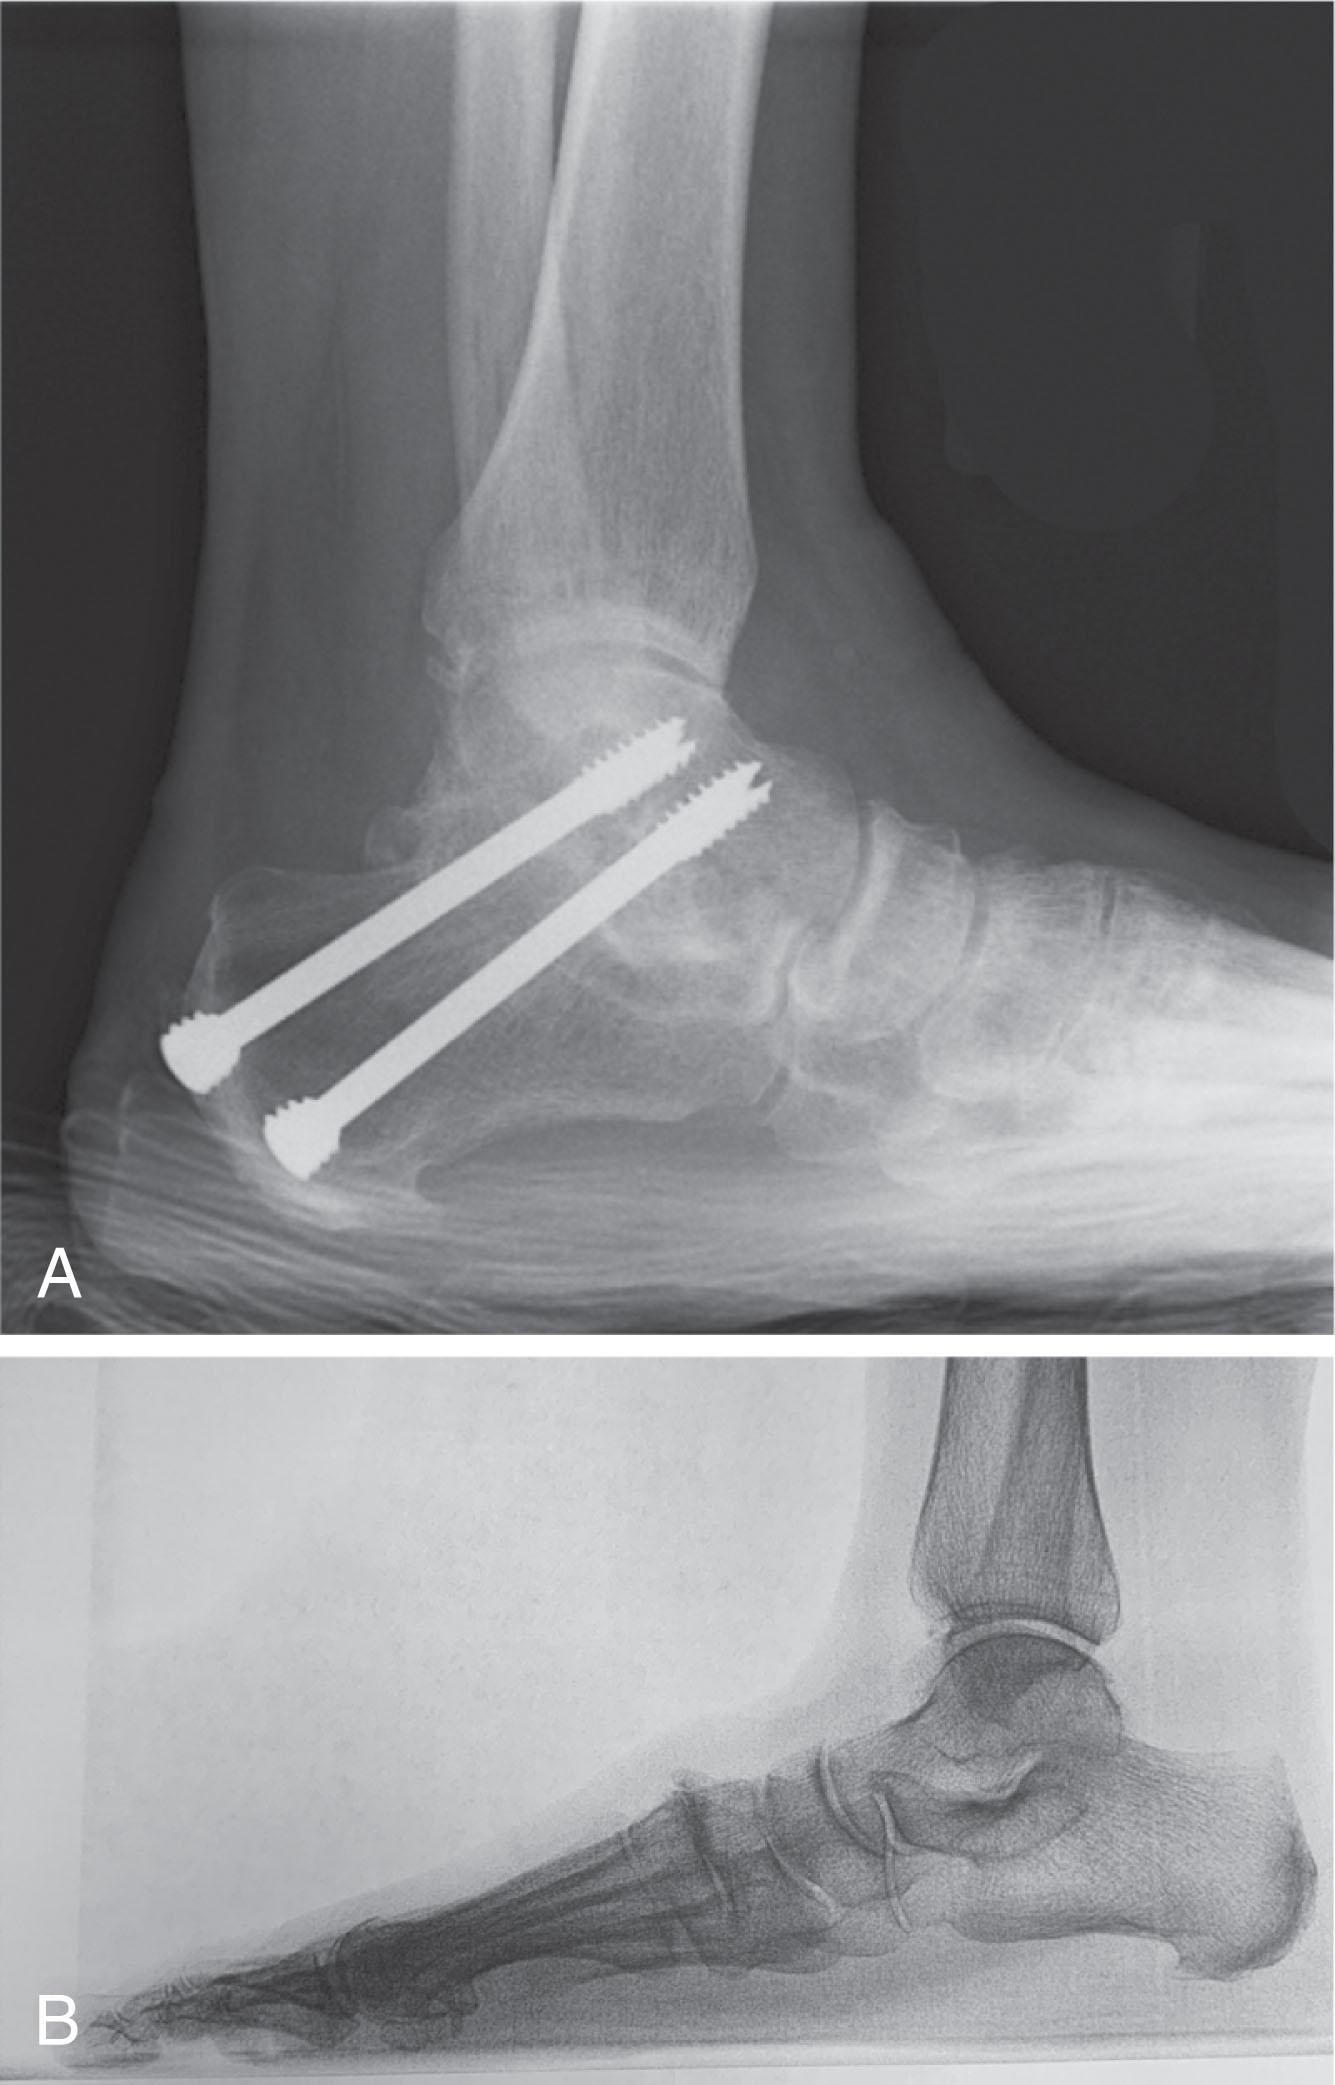 Fig. 21-10, Primary subtalar arthrodesis for subtalar arthritis with lag screw fixation.